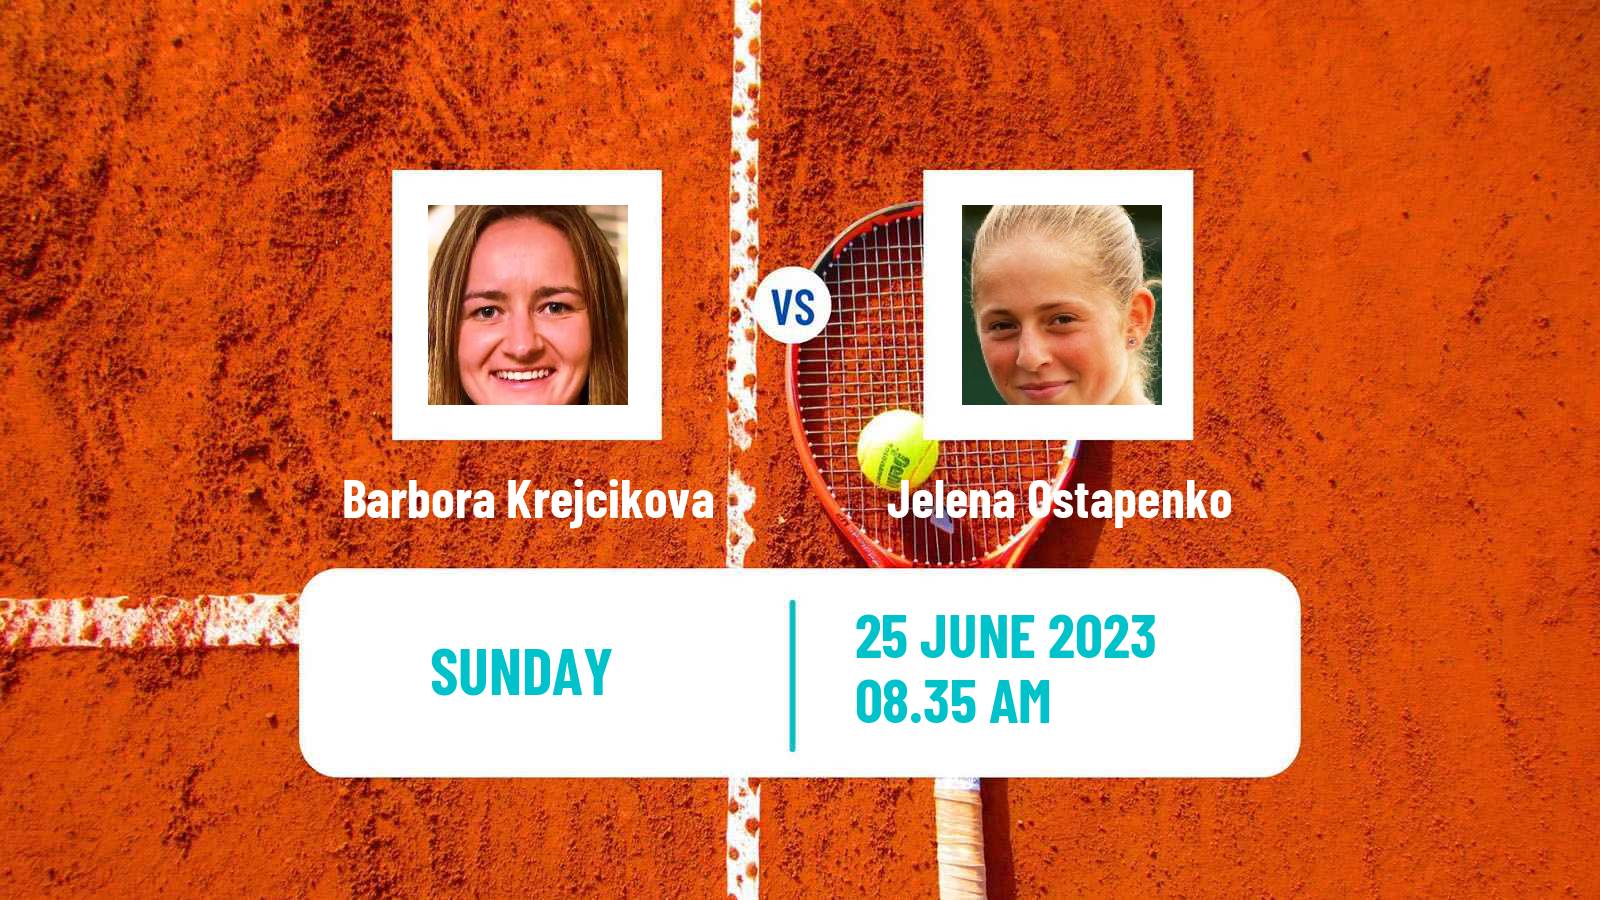 Tennis WTA Birmingham Barbora Krejcikova - Jelena Ostapenko